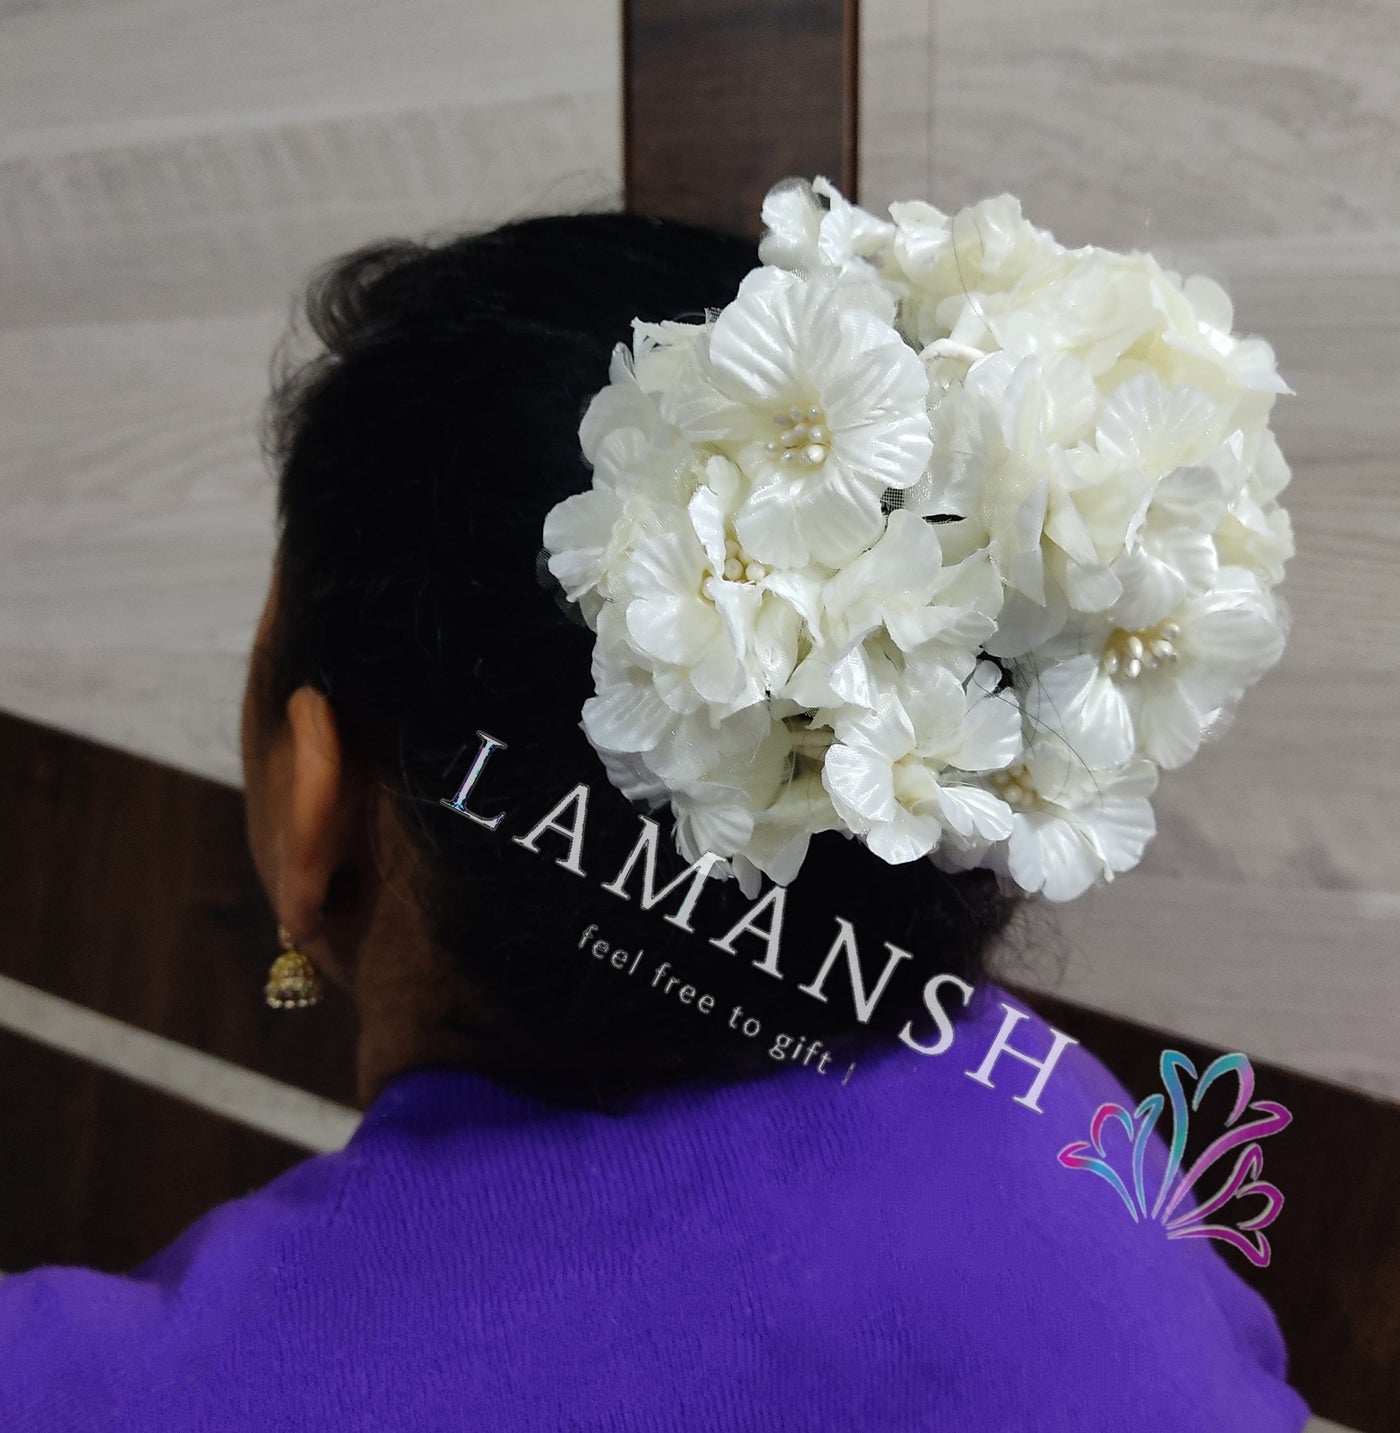 LAMANSH Flower Hair Accessory White / 12 bunch of Flowers ( 12 Flowers in each bunch ) / Bridal LAMANSH® Pack of 12×12 Flowers for Hair Bun Juda / Floral Hair Accessory set for Women's Bridal Makeup